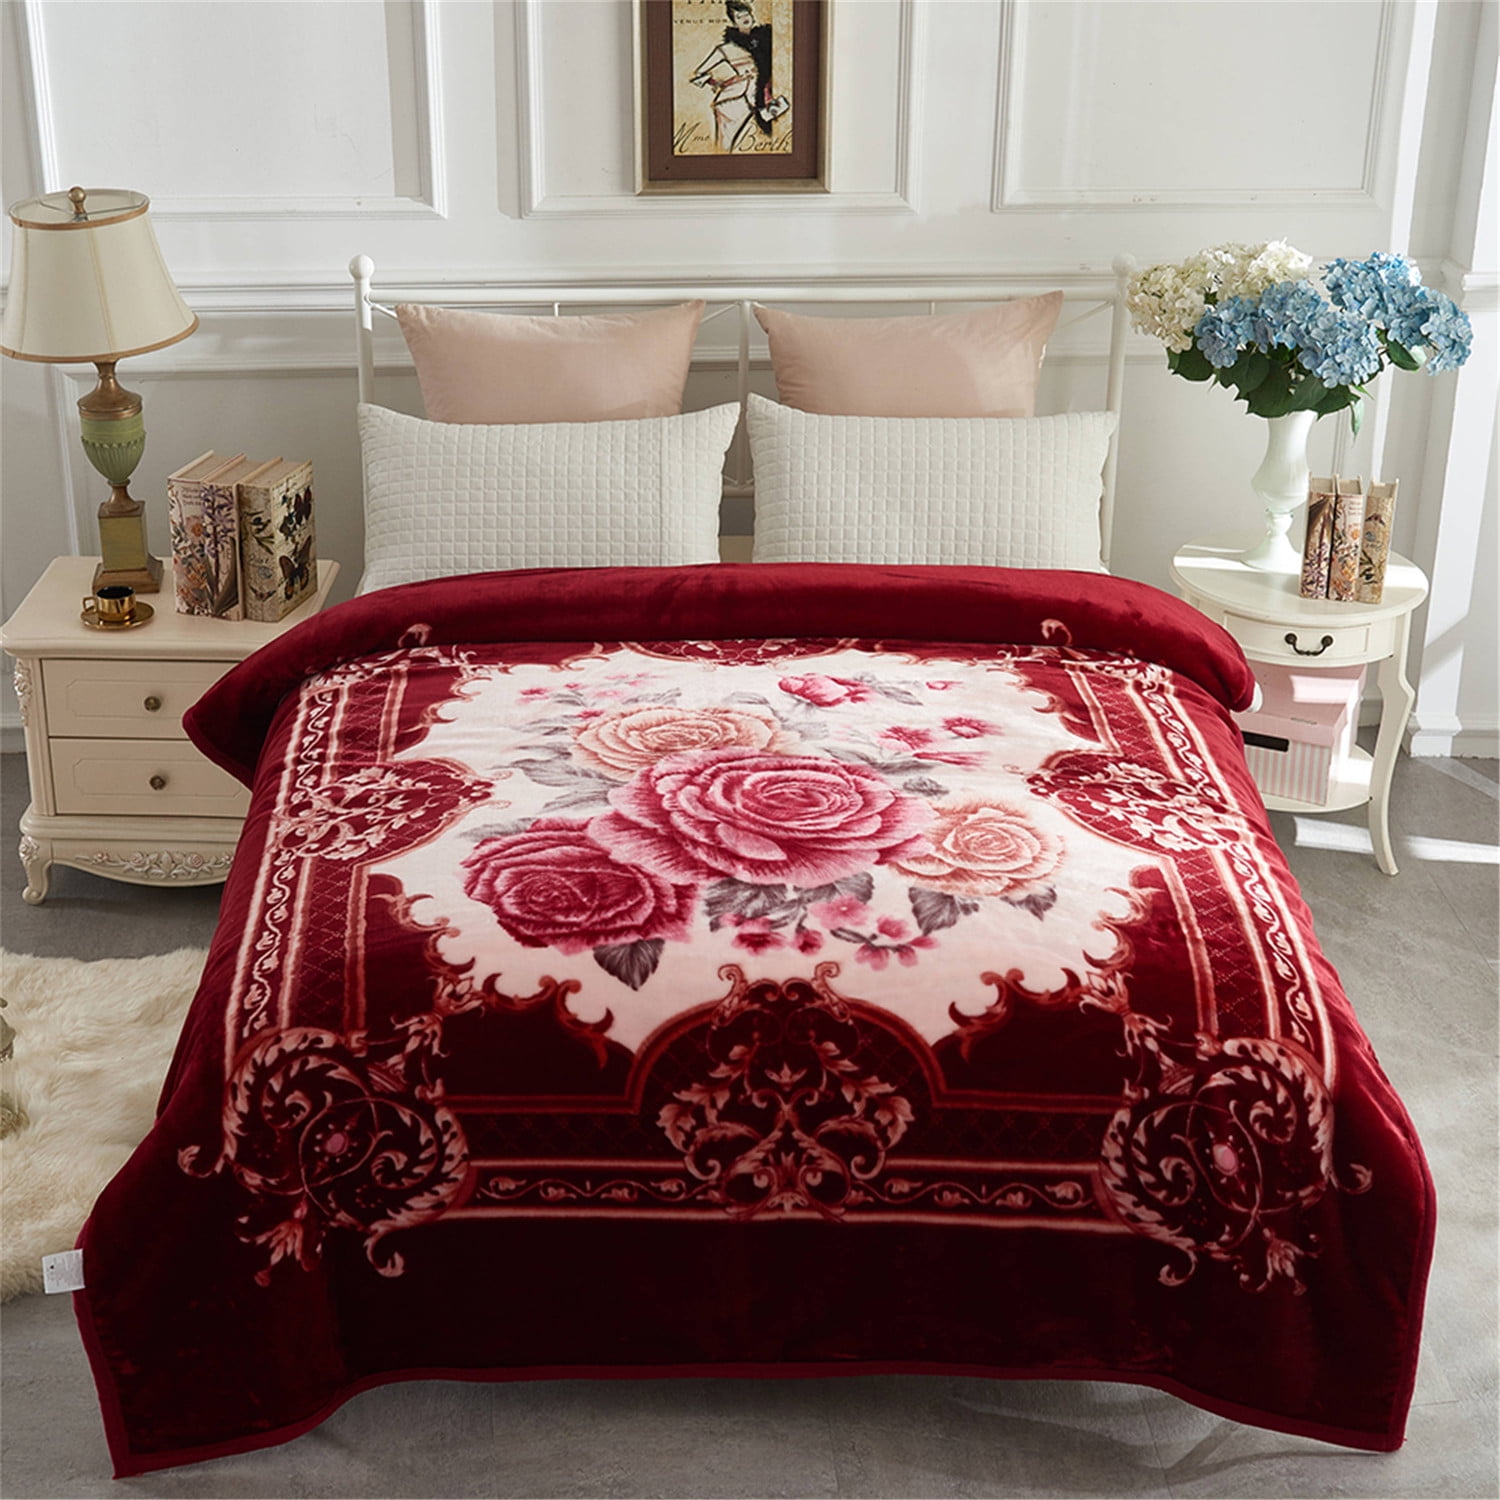 2 Ply Burgundy Winter Blanket Floral Reversible Bedding Sheet Queen 77"x87" 